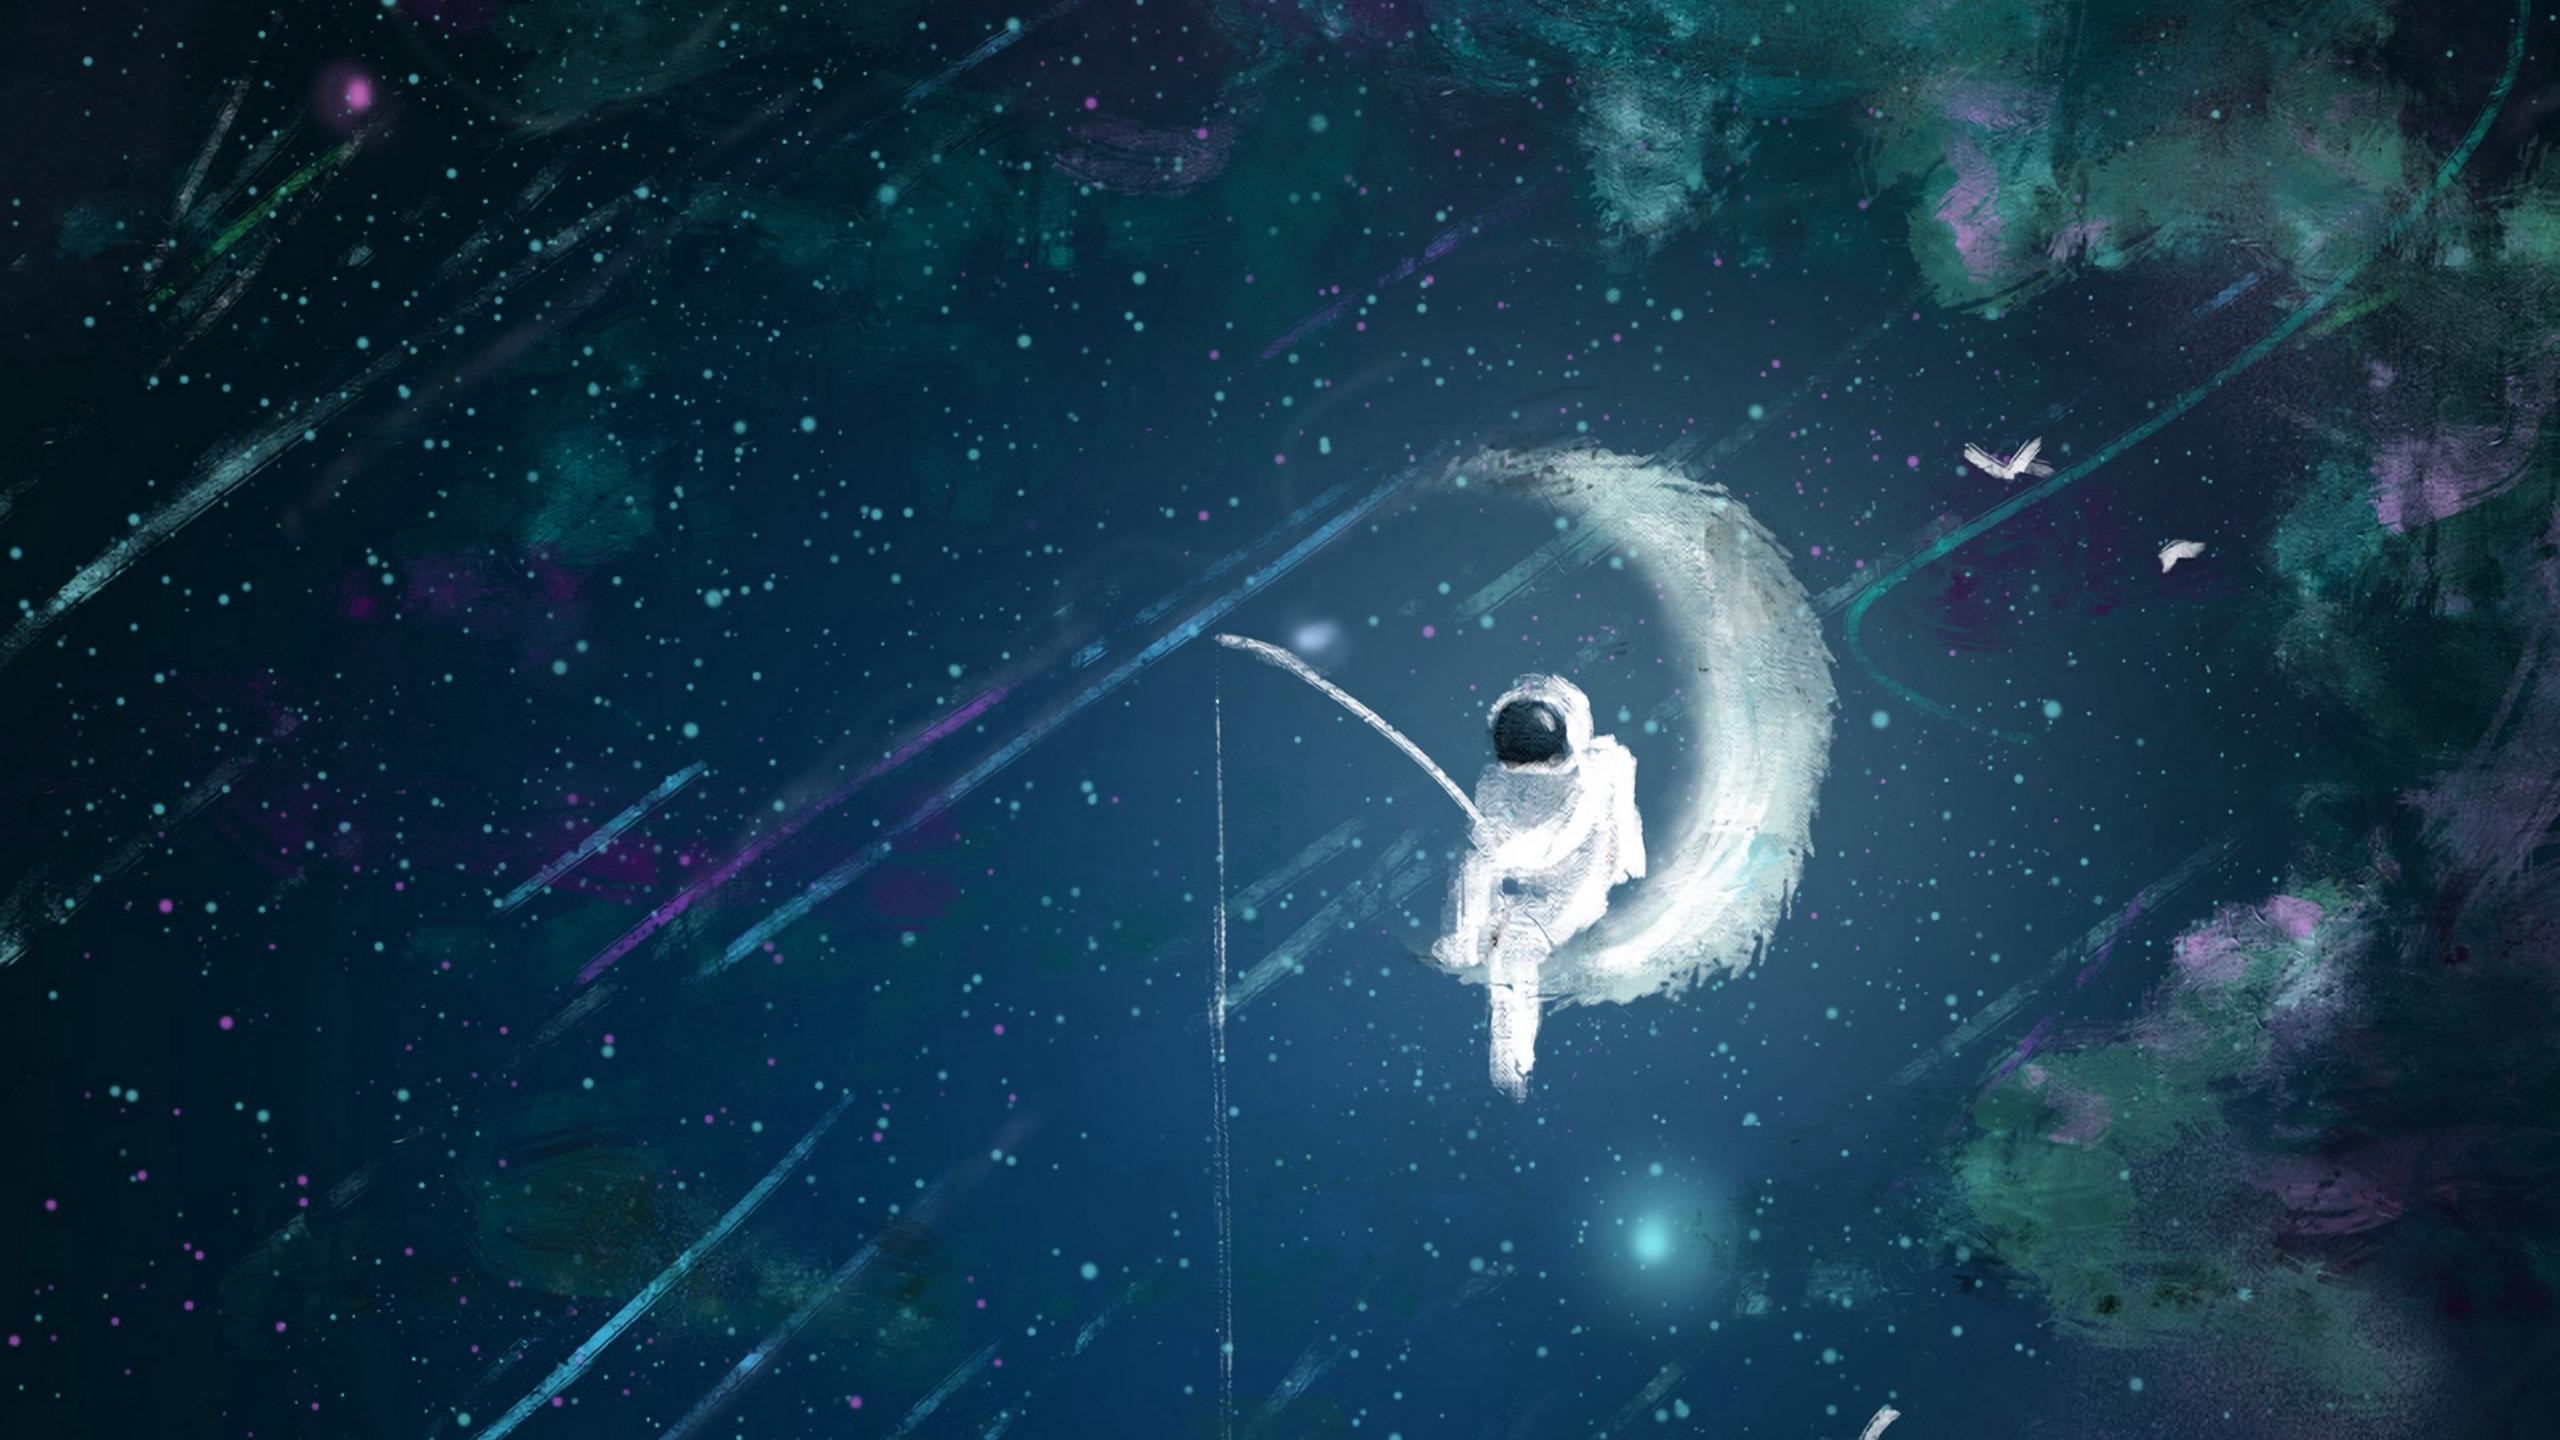 Download wallpaper 2560x1440 astronaut, moon, fishing, art